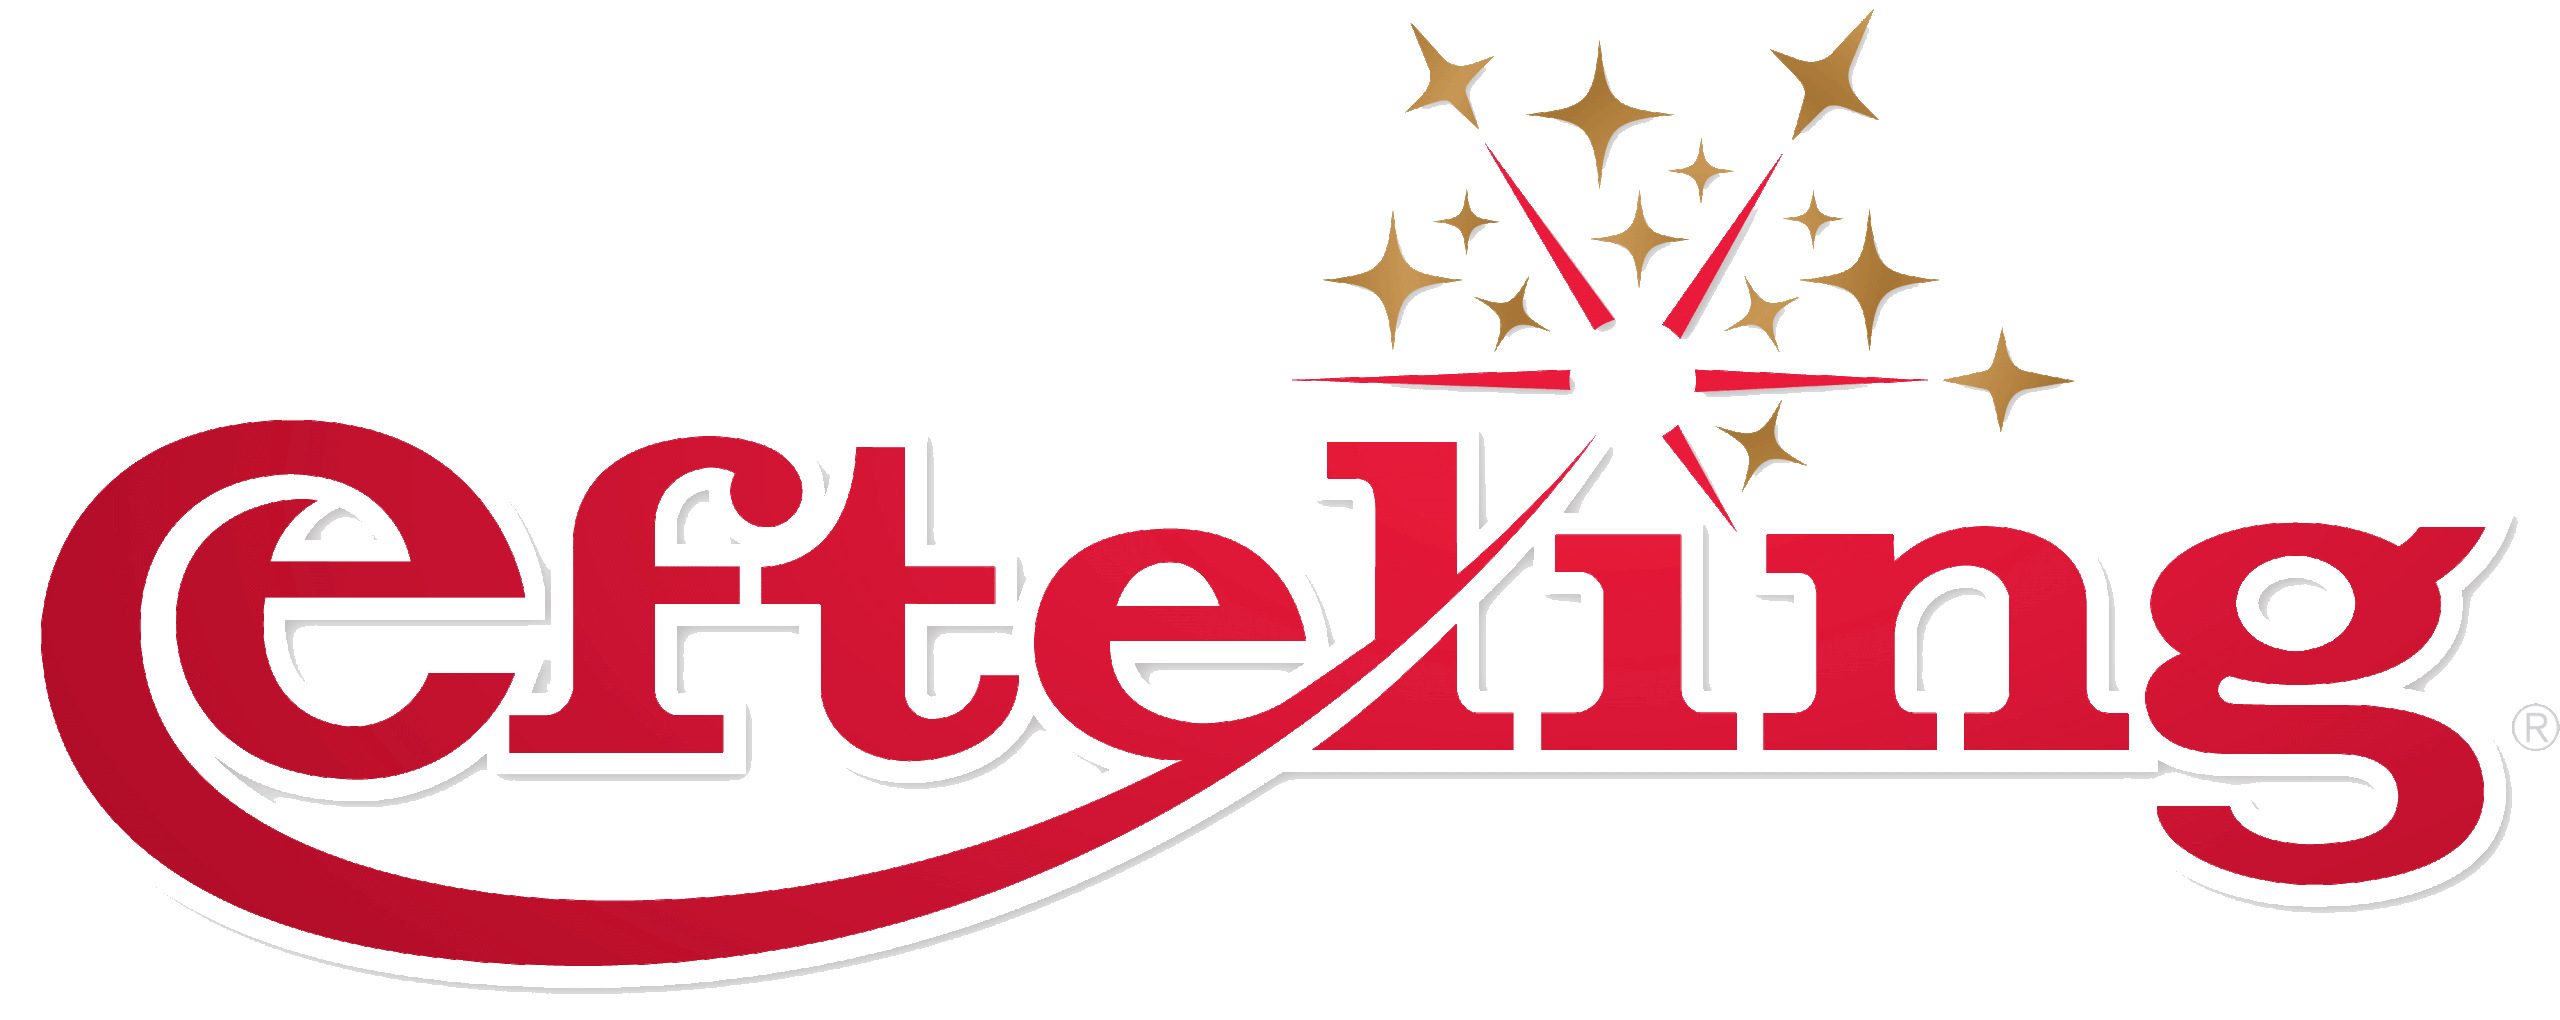 Logo de Efteling